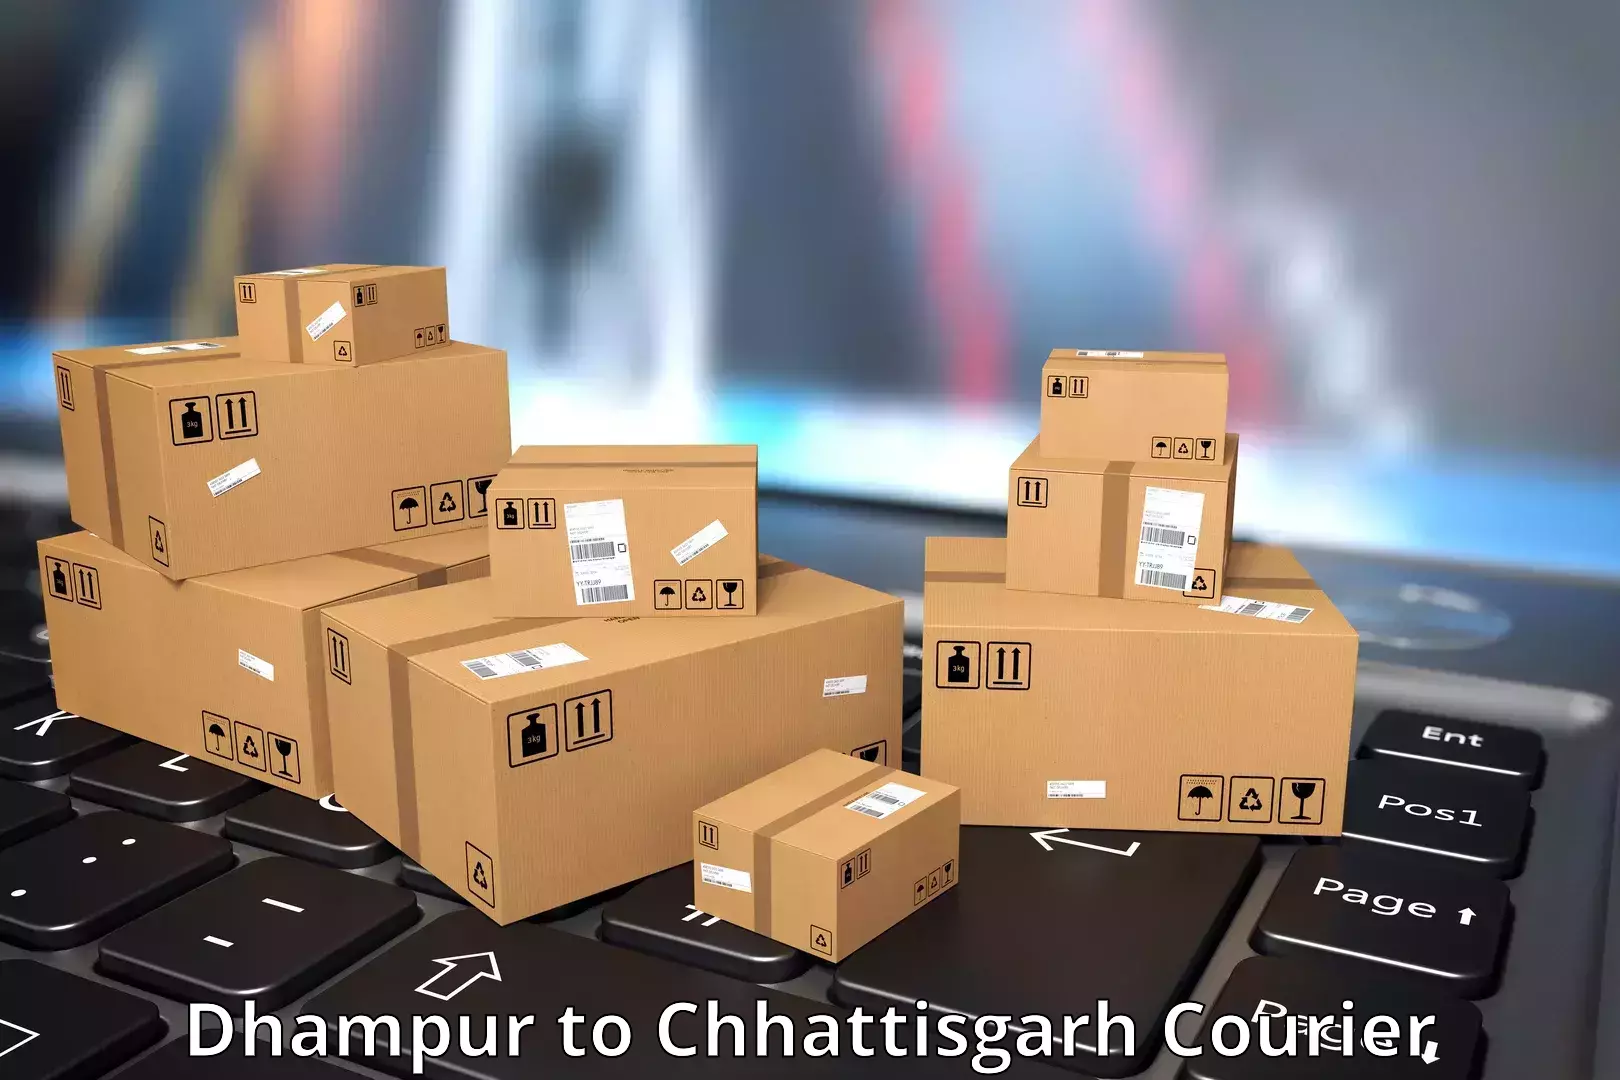 Global logistics network Dhampur to bagbahra